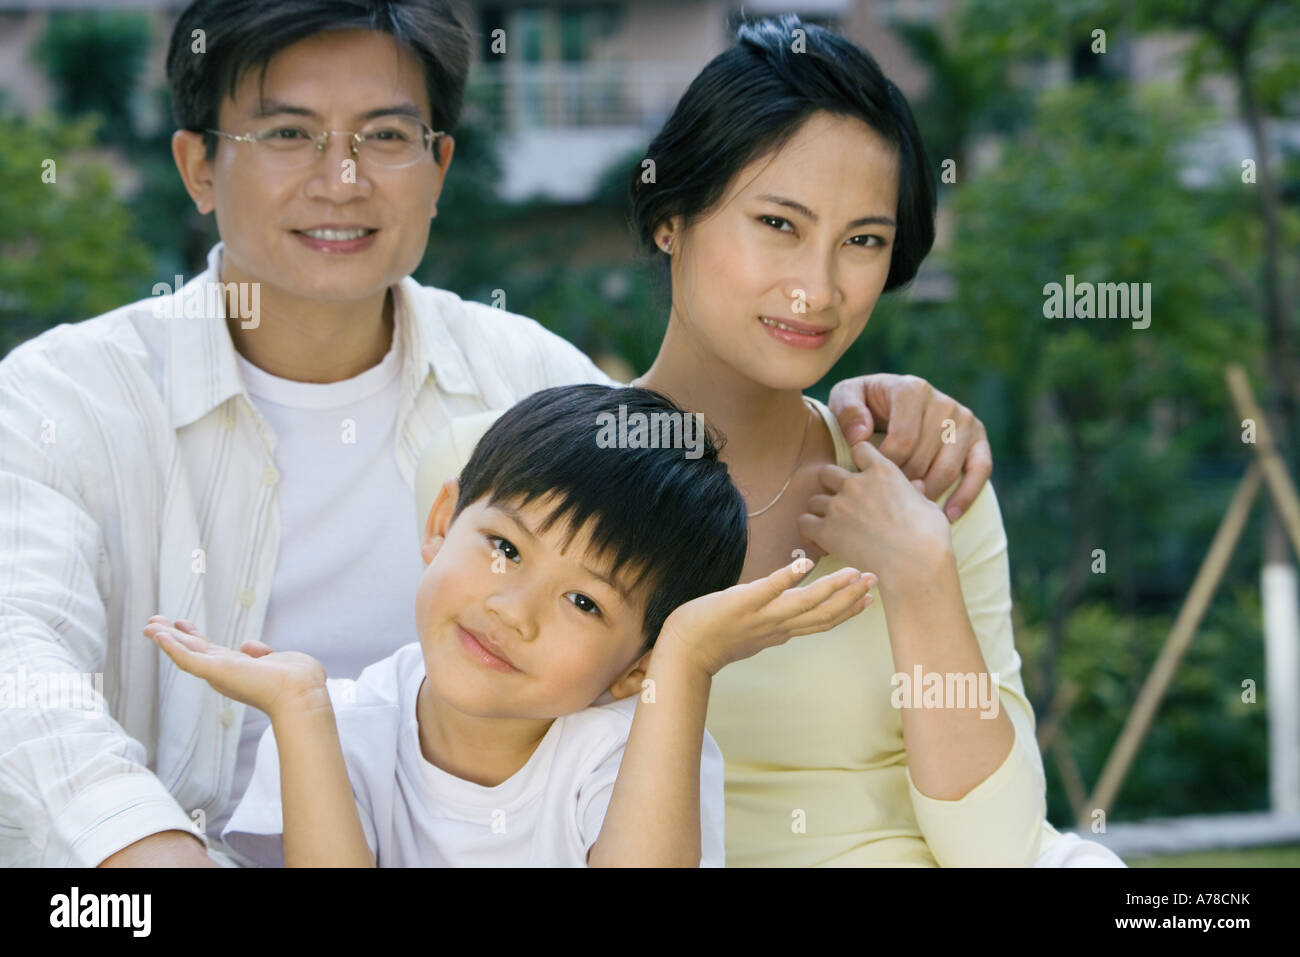 Family, smiling at camera, boy shrugging Stock Photo